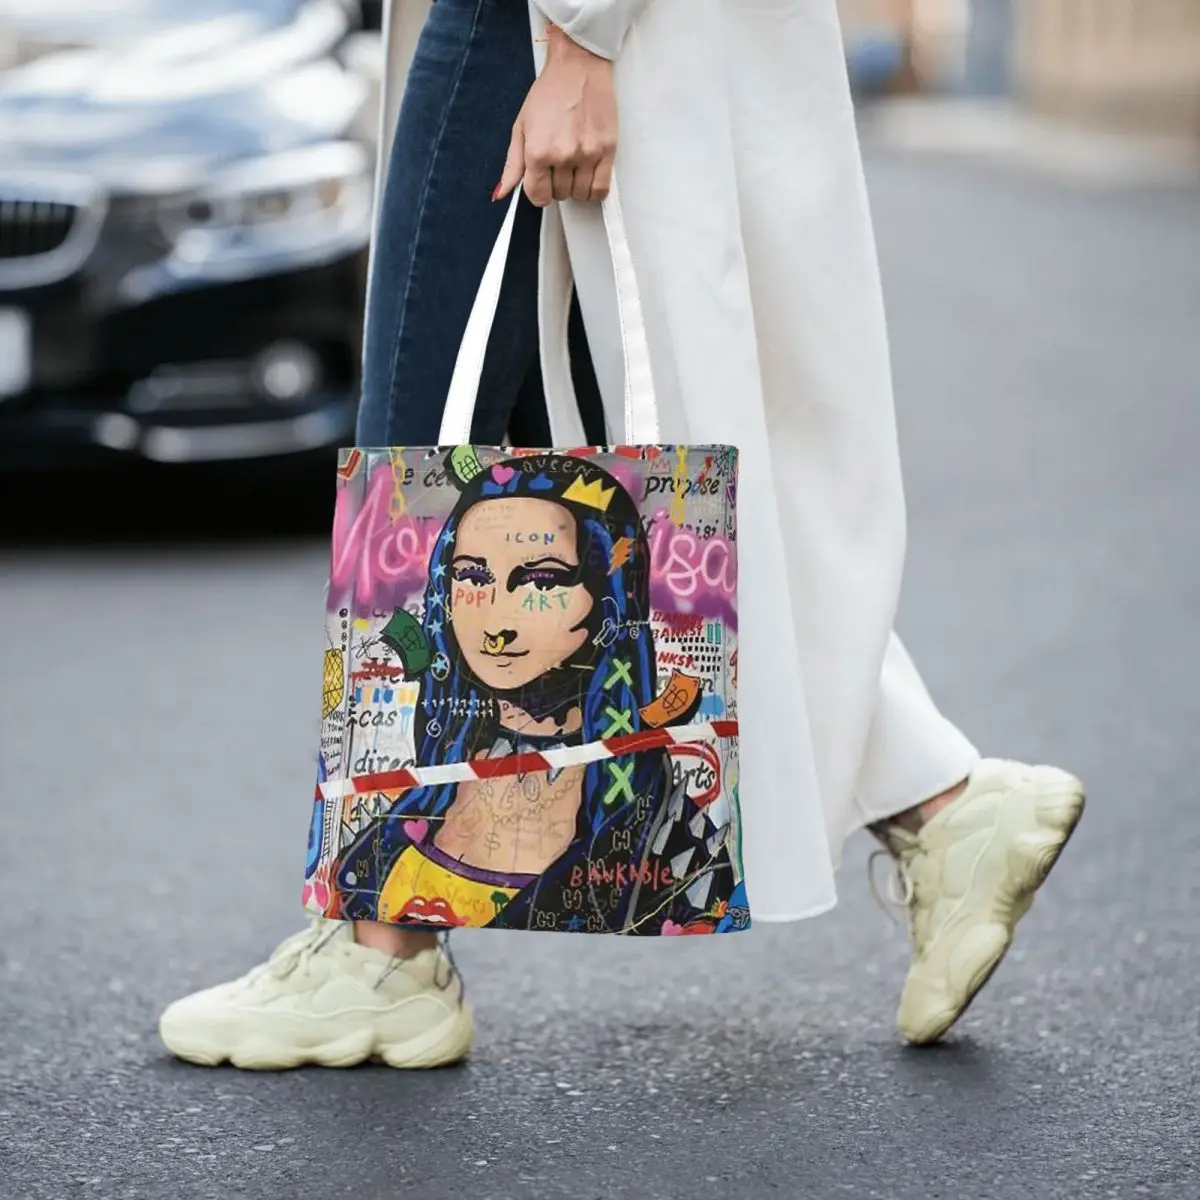 The Vintage Mona Lisa Abstract Women Canvas Handbag Large Capacity Shopper Bag Tote Bag withSmall Shoulder Bag